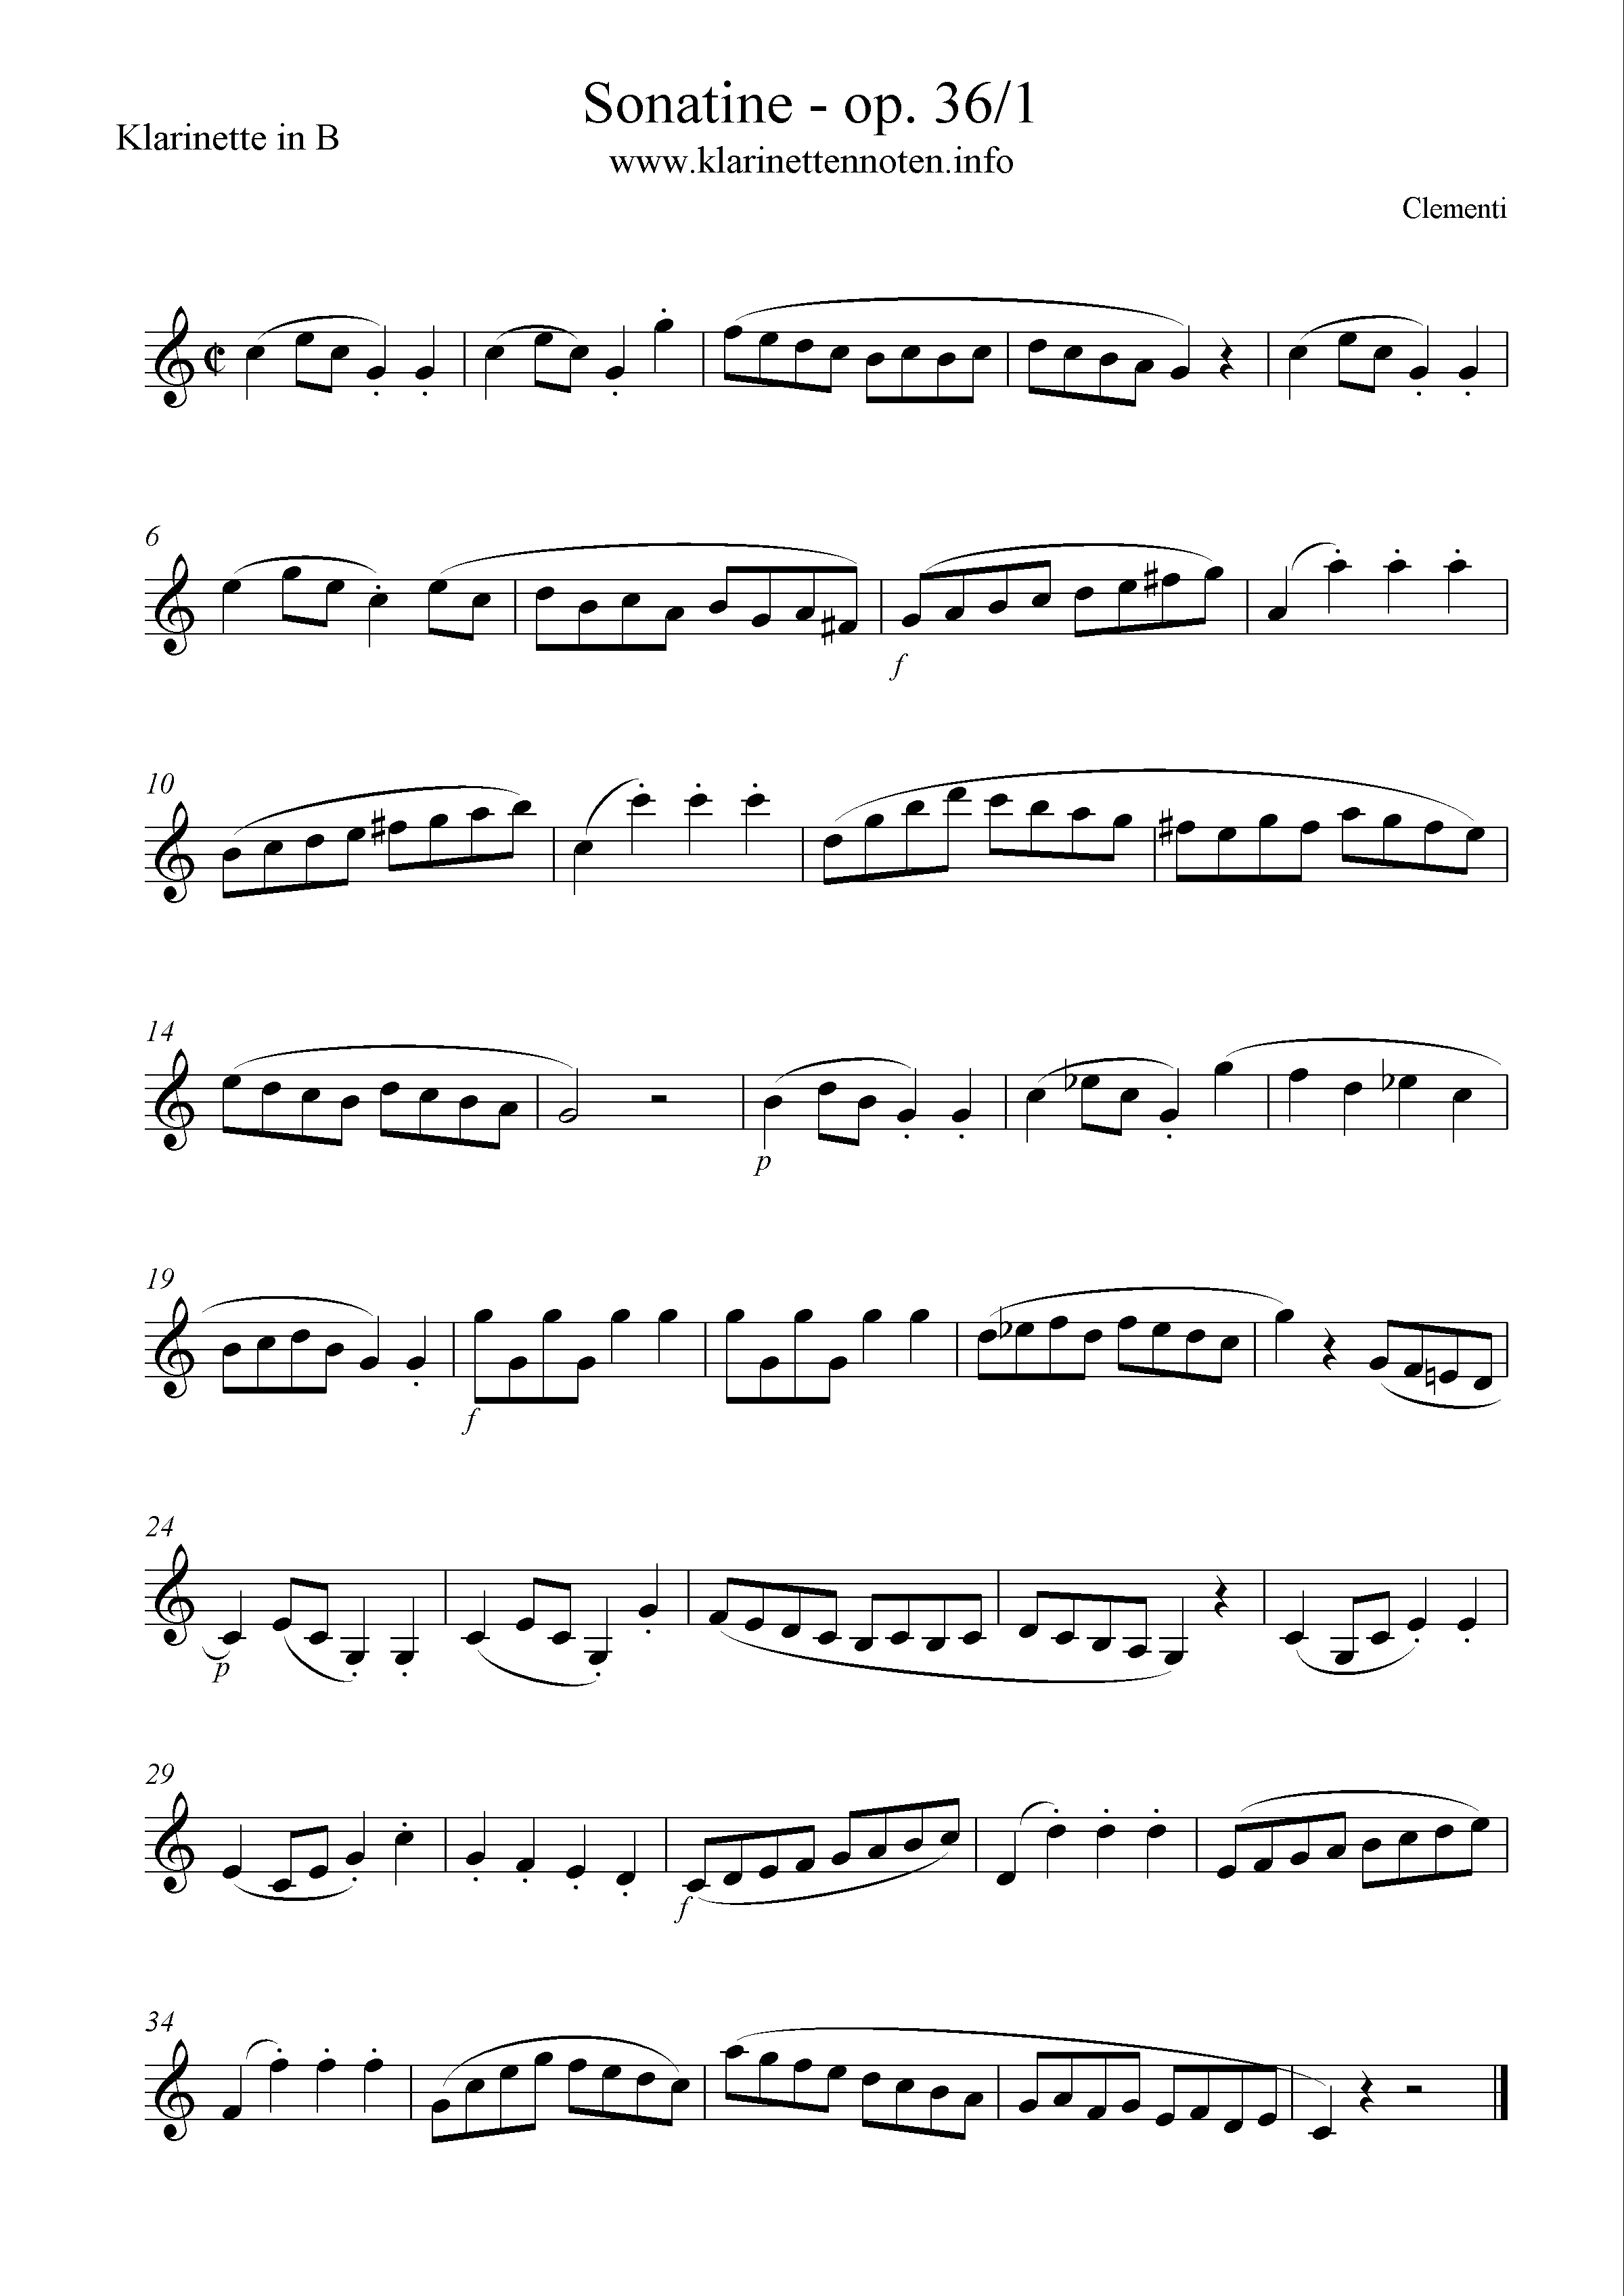 Clementi Sonatine op. 36/1, Clarinet Solo